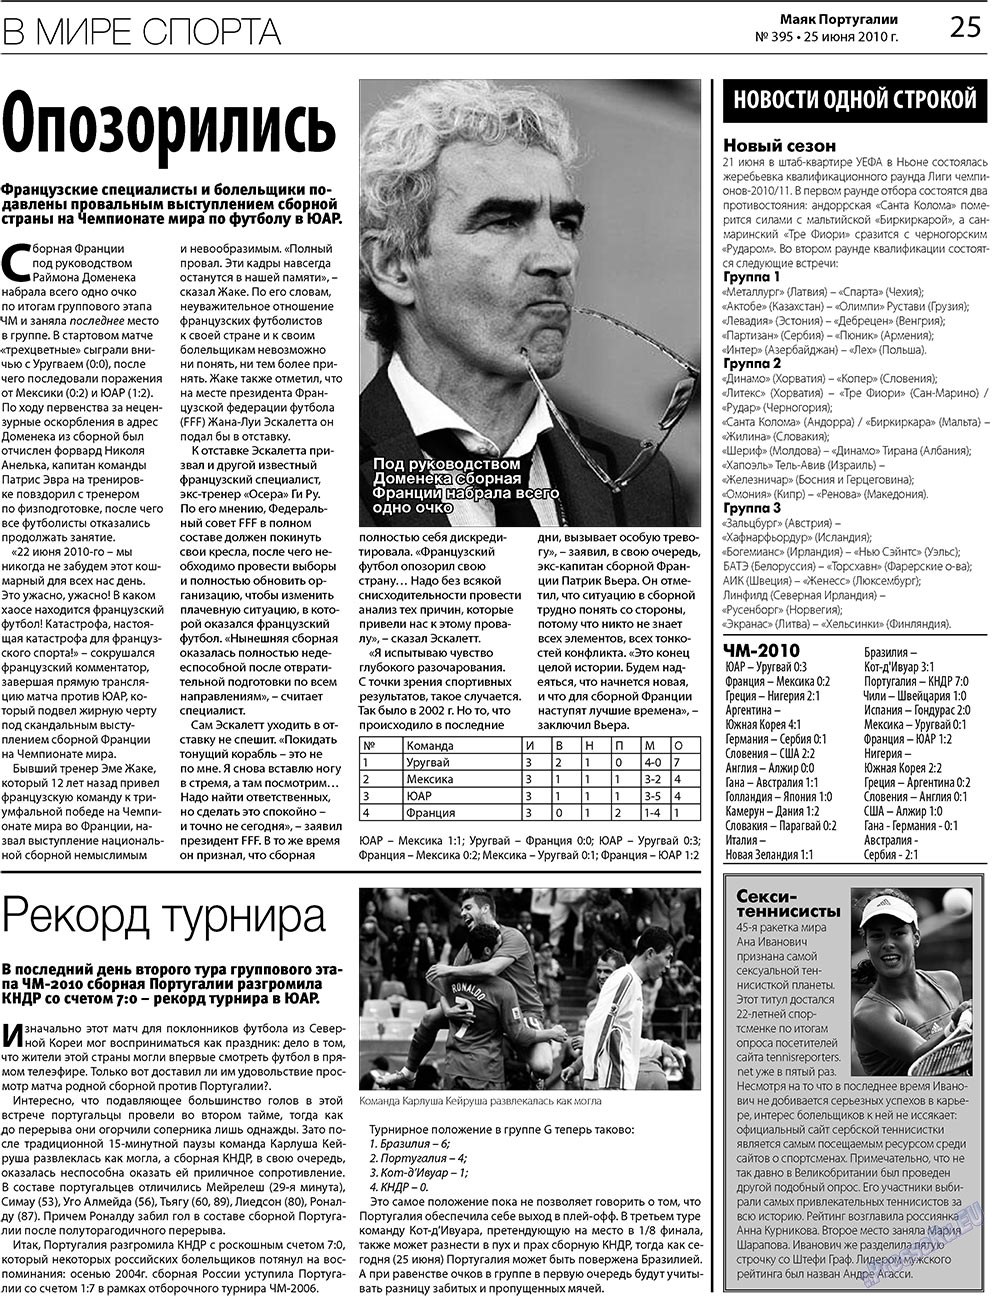 Маяк Португалии, газета. 2010 №395 стр.25